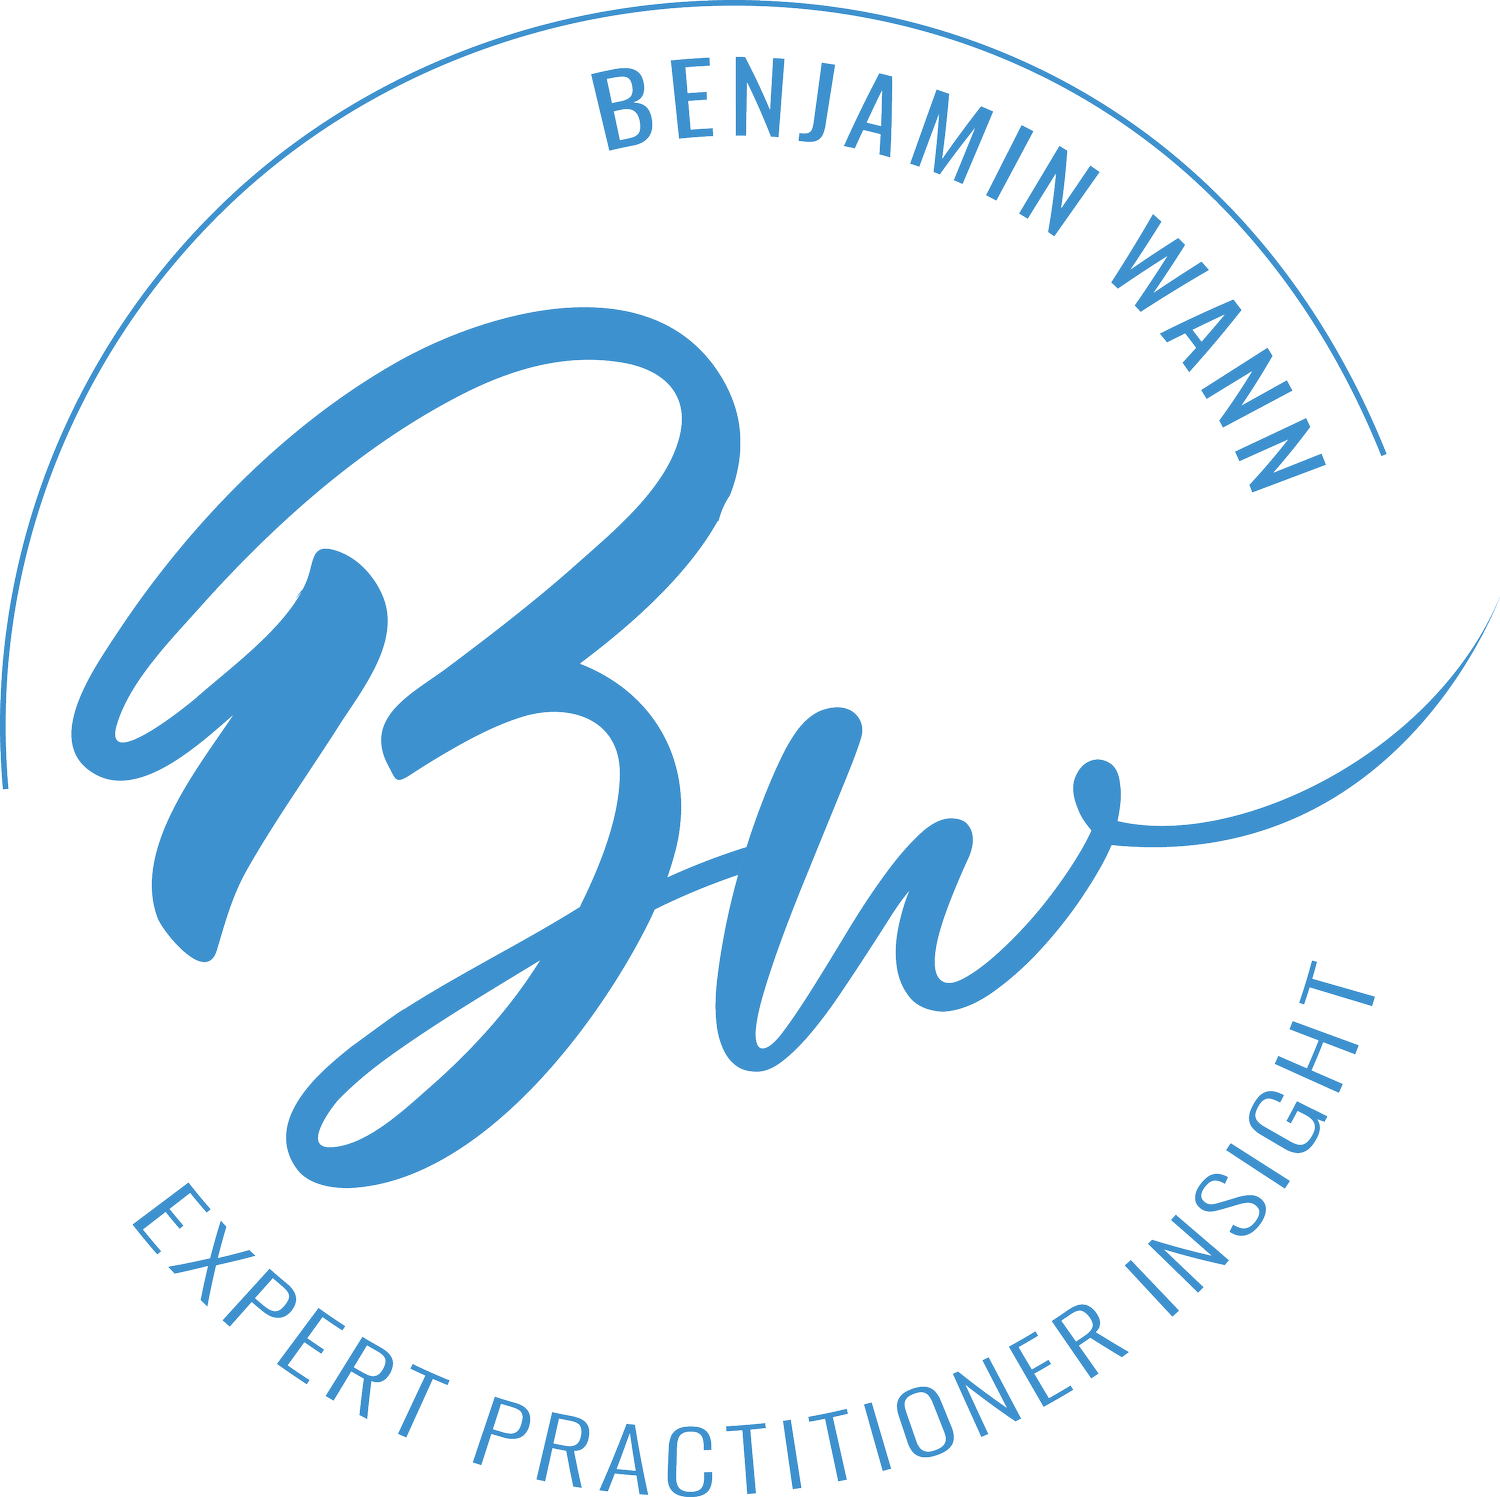 Benjamin Wann.com